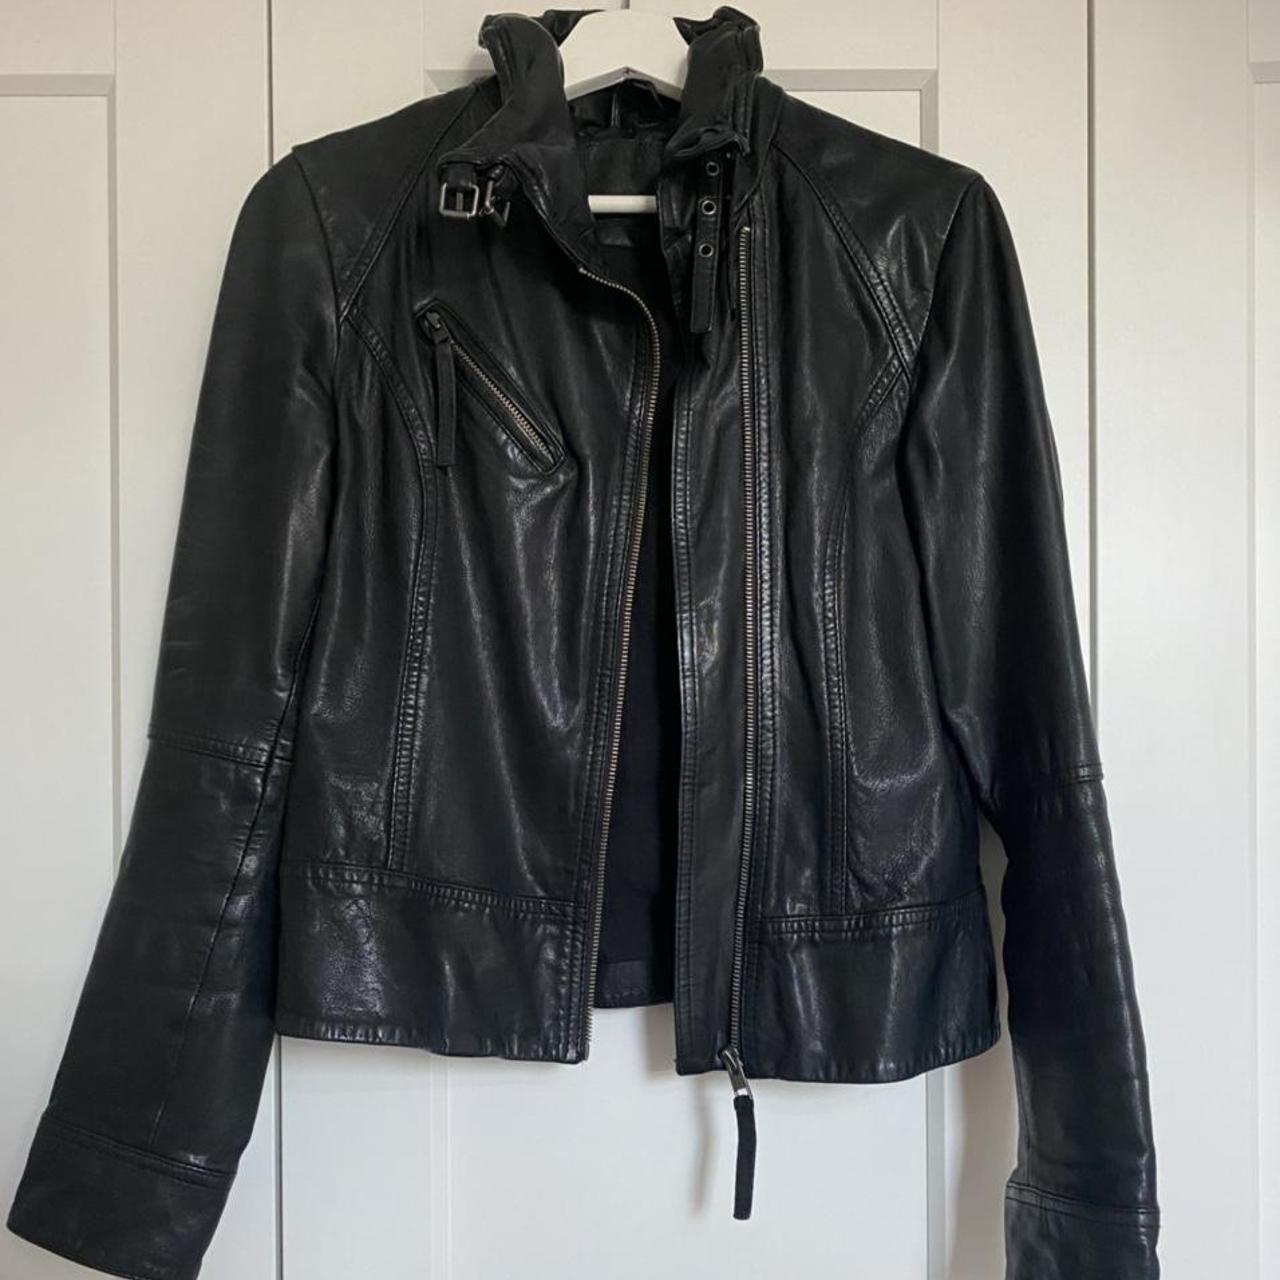 Product Image 3 - AllSaints leather jacket. Slim fit.